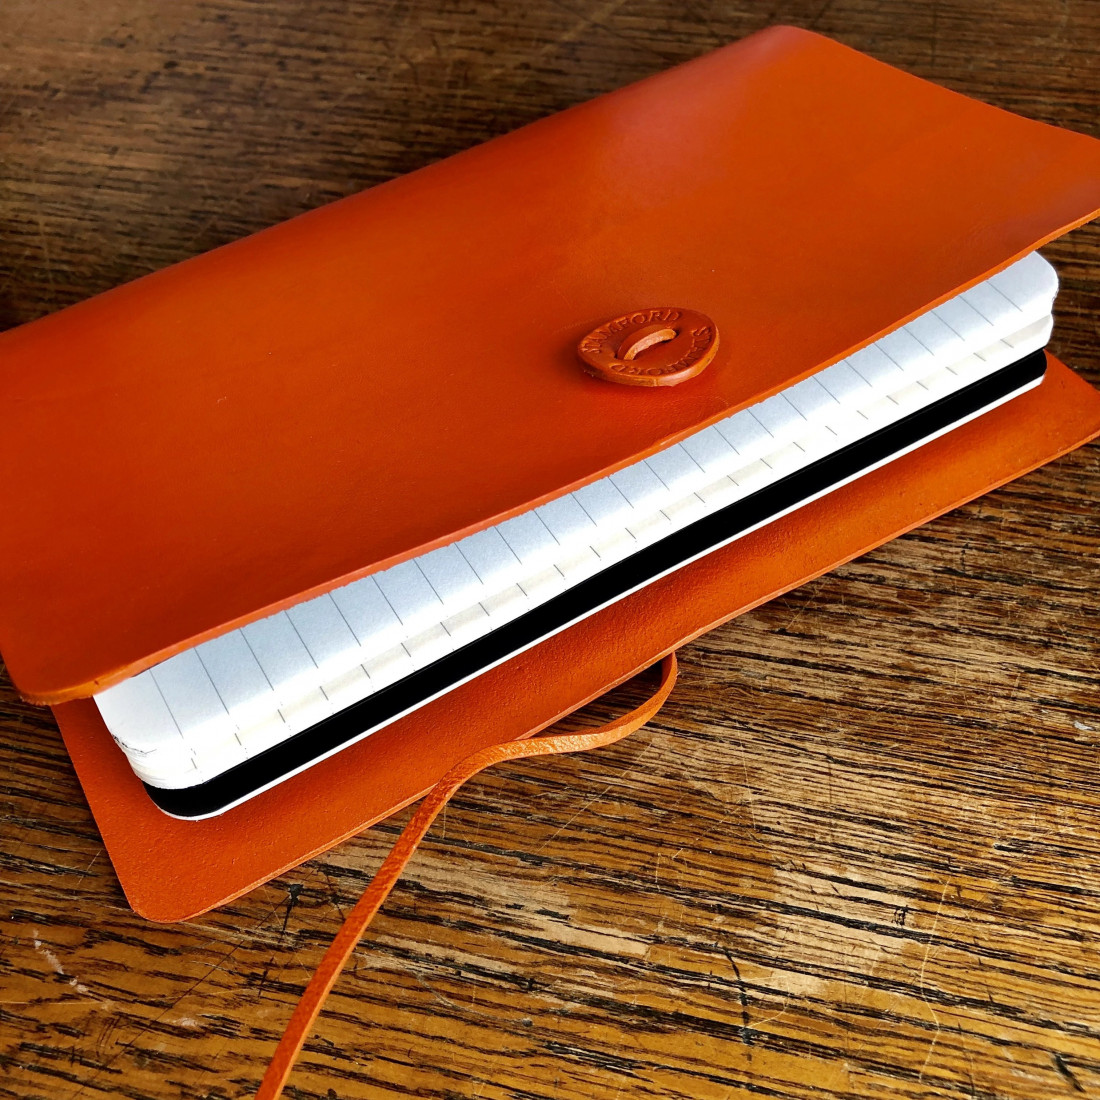 The Travellers Journal Bright Range, Orange, Large (18x25.5) Stamford